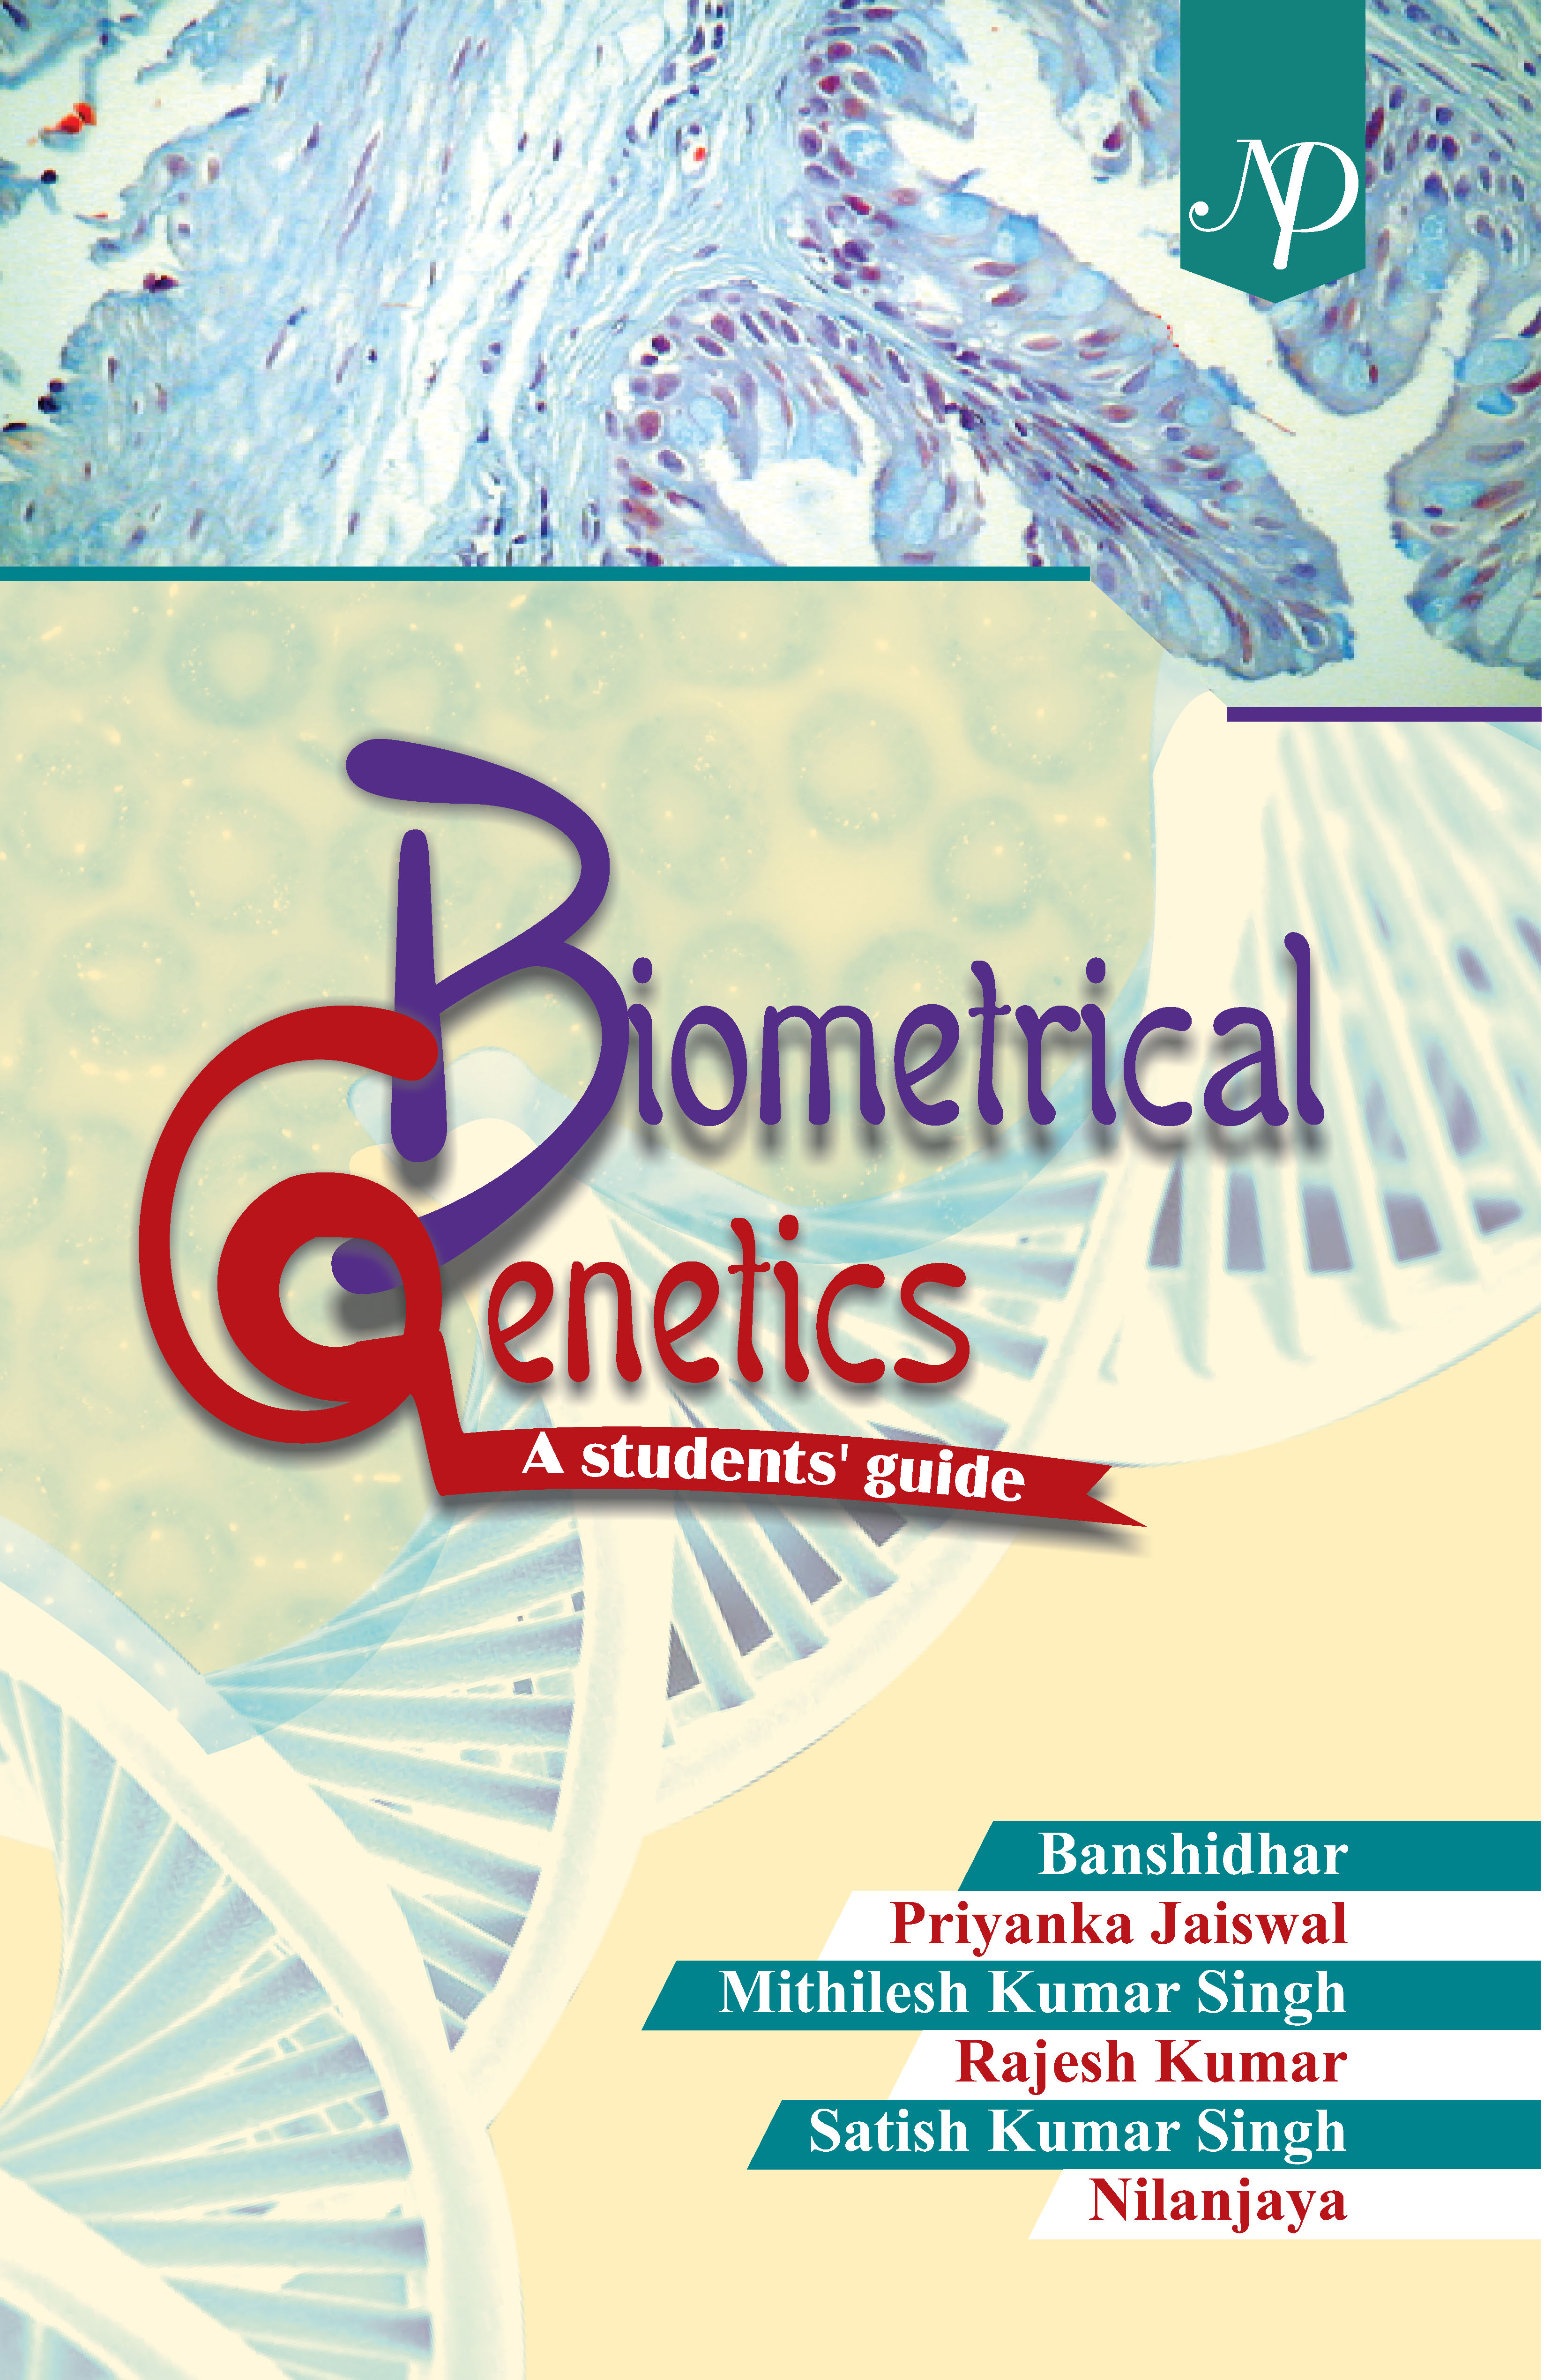 Biometrical Genetics - A Students' guide By Bansidhar.jpg